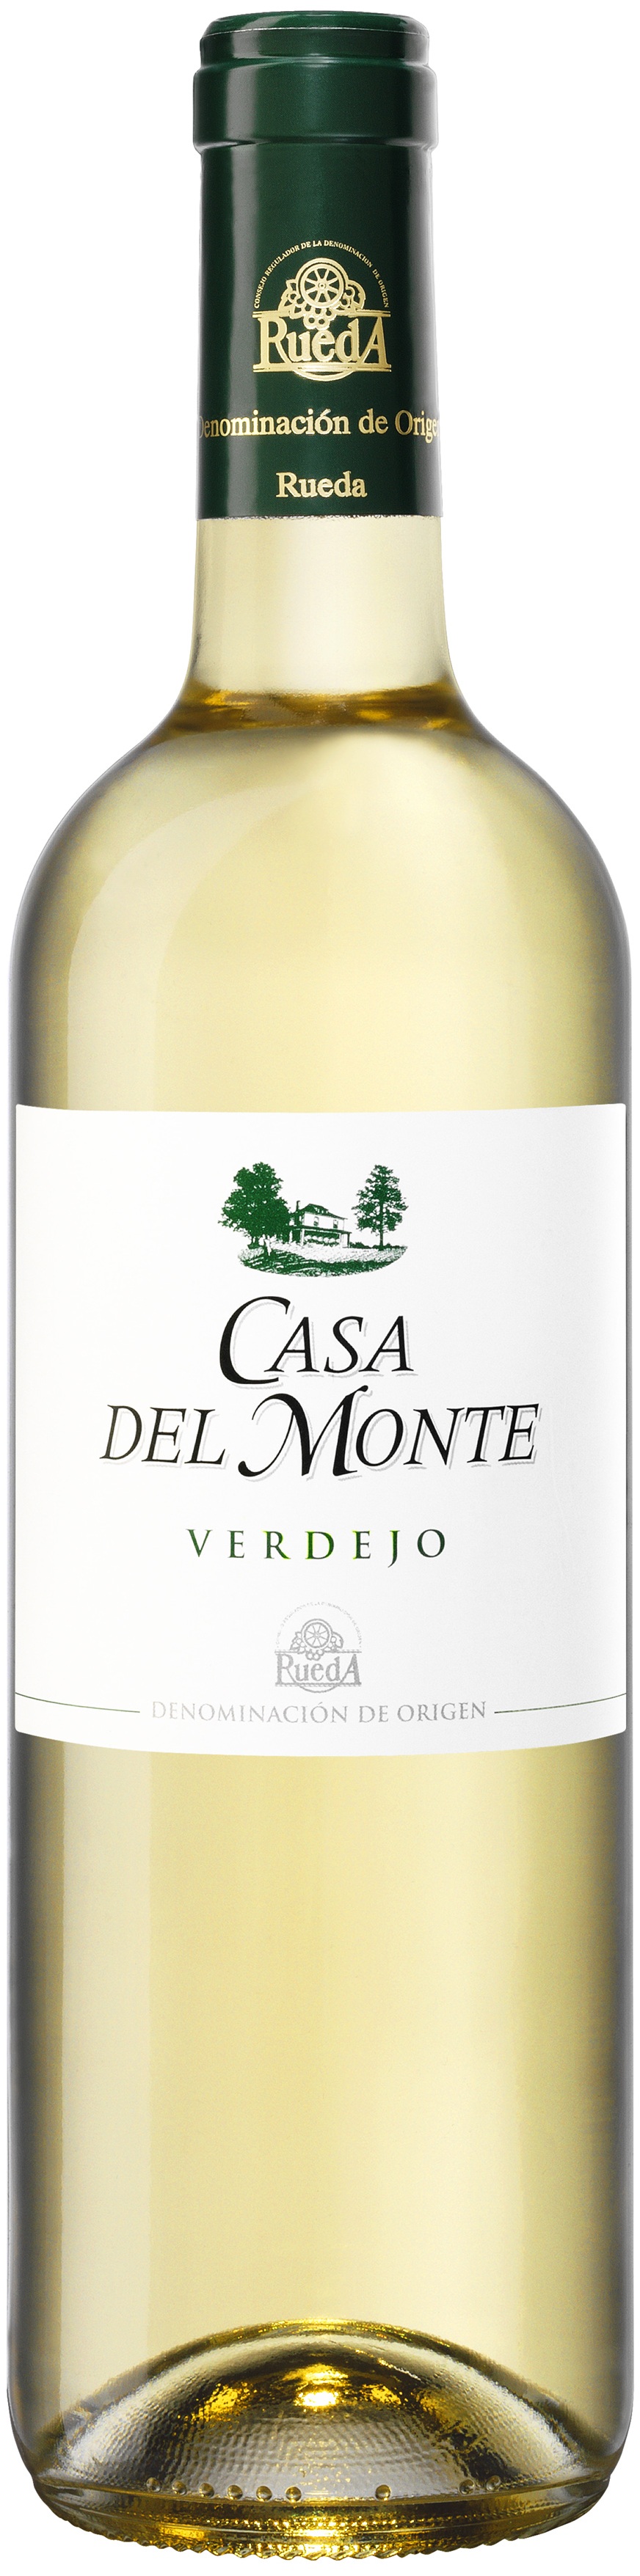 Image of Wine bottle Casa del Monte Verdejo